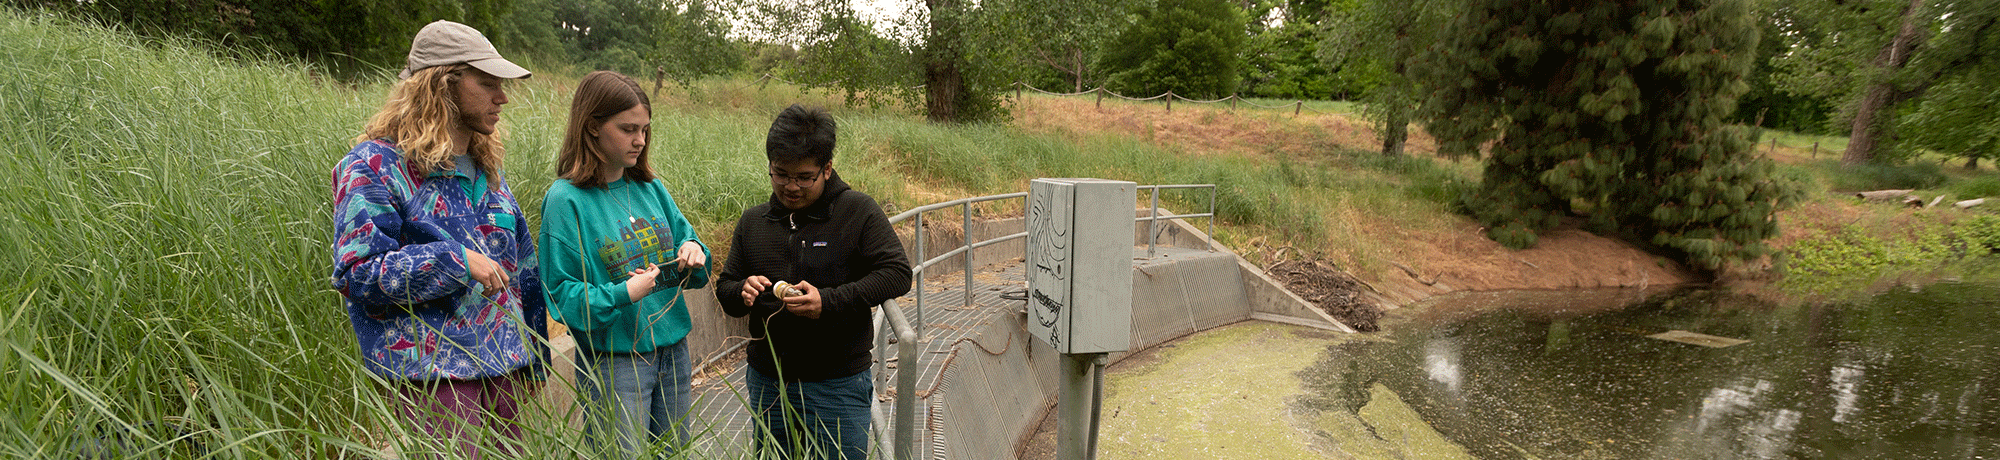 Students taking water samples at the UC Davis Arboretum.